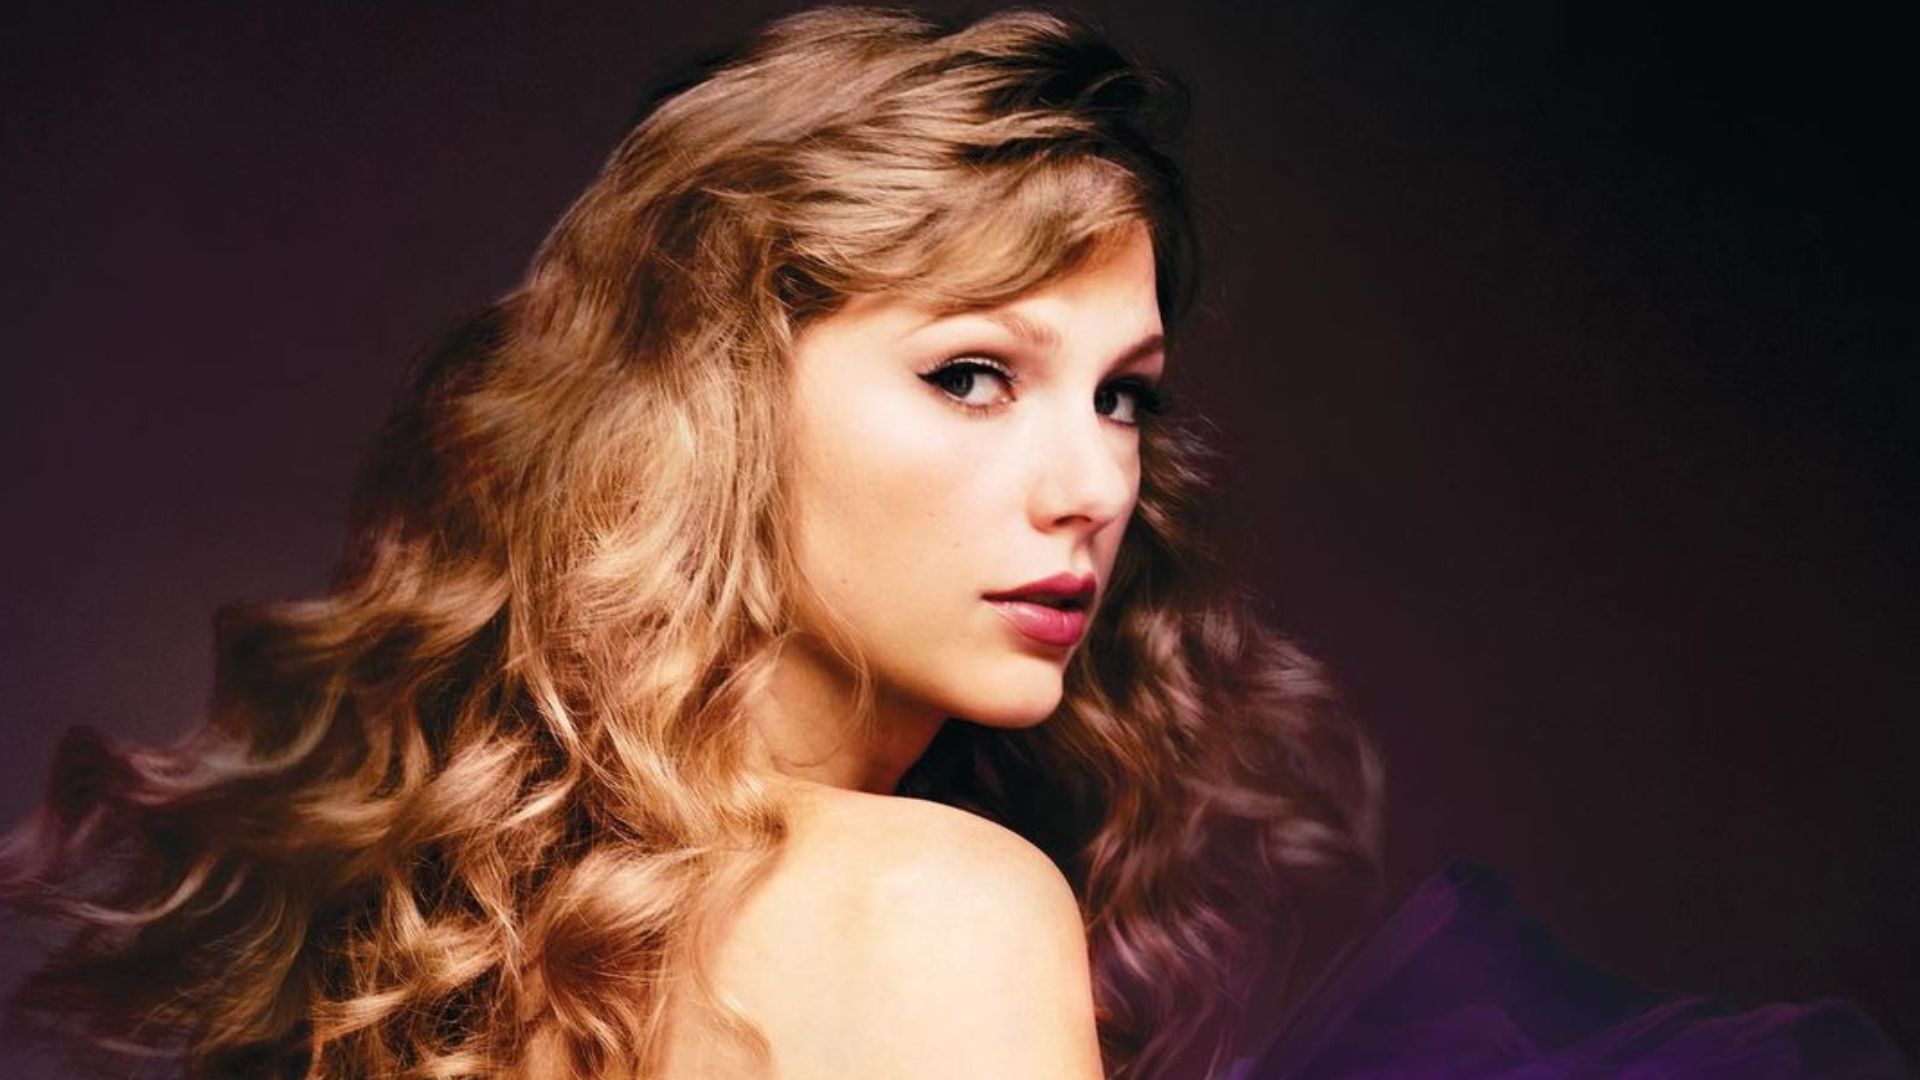 Taylor Swift Brasil Confira a tradução de todas as faixas From The Vault  do 1989 (Taylor's Version) - Taylor Swift Brasil